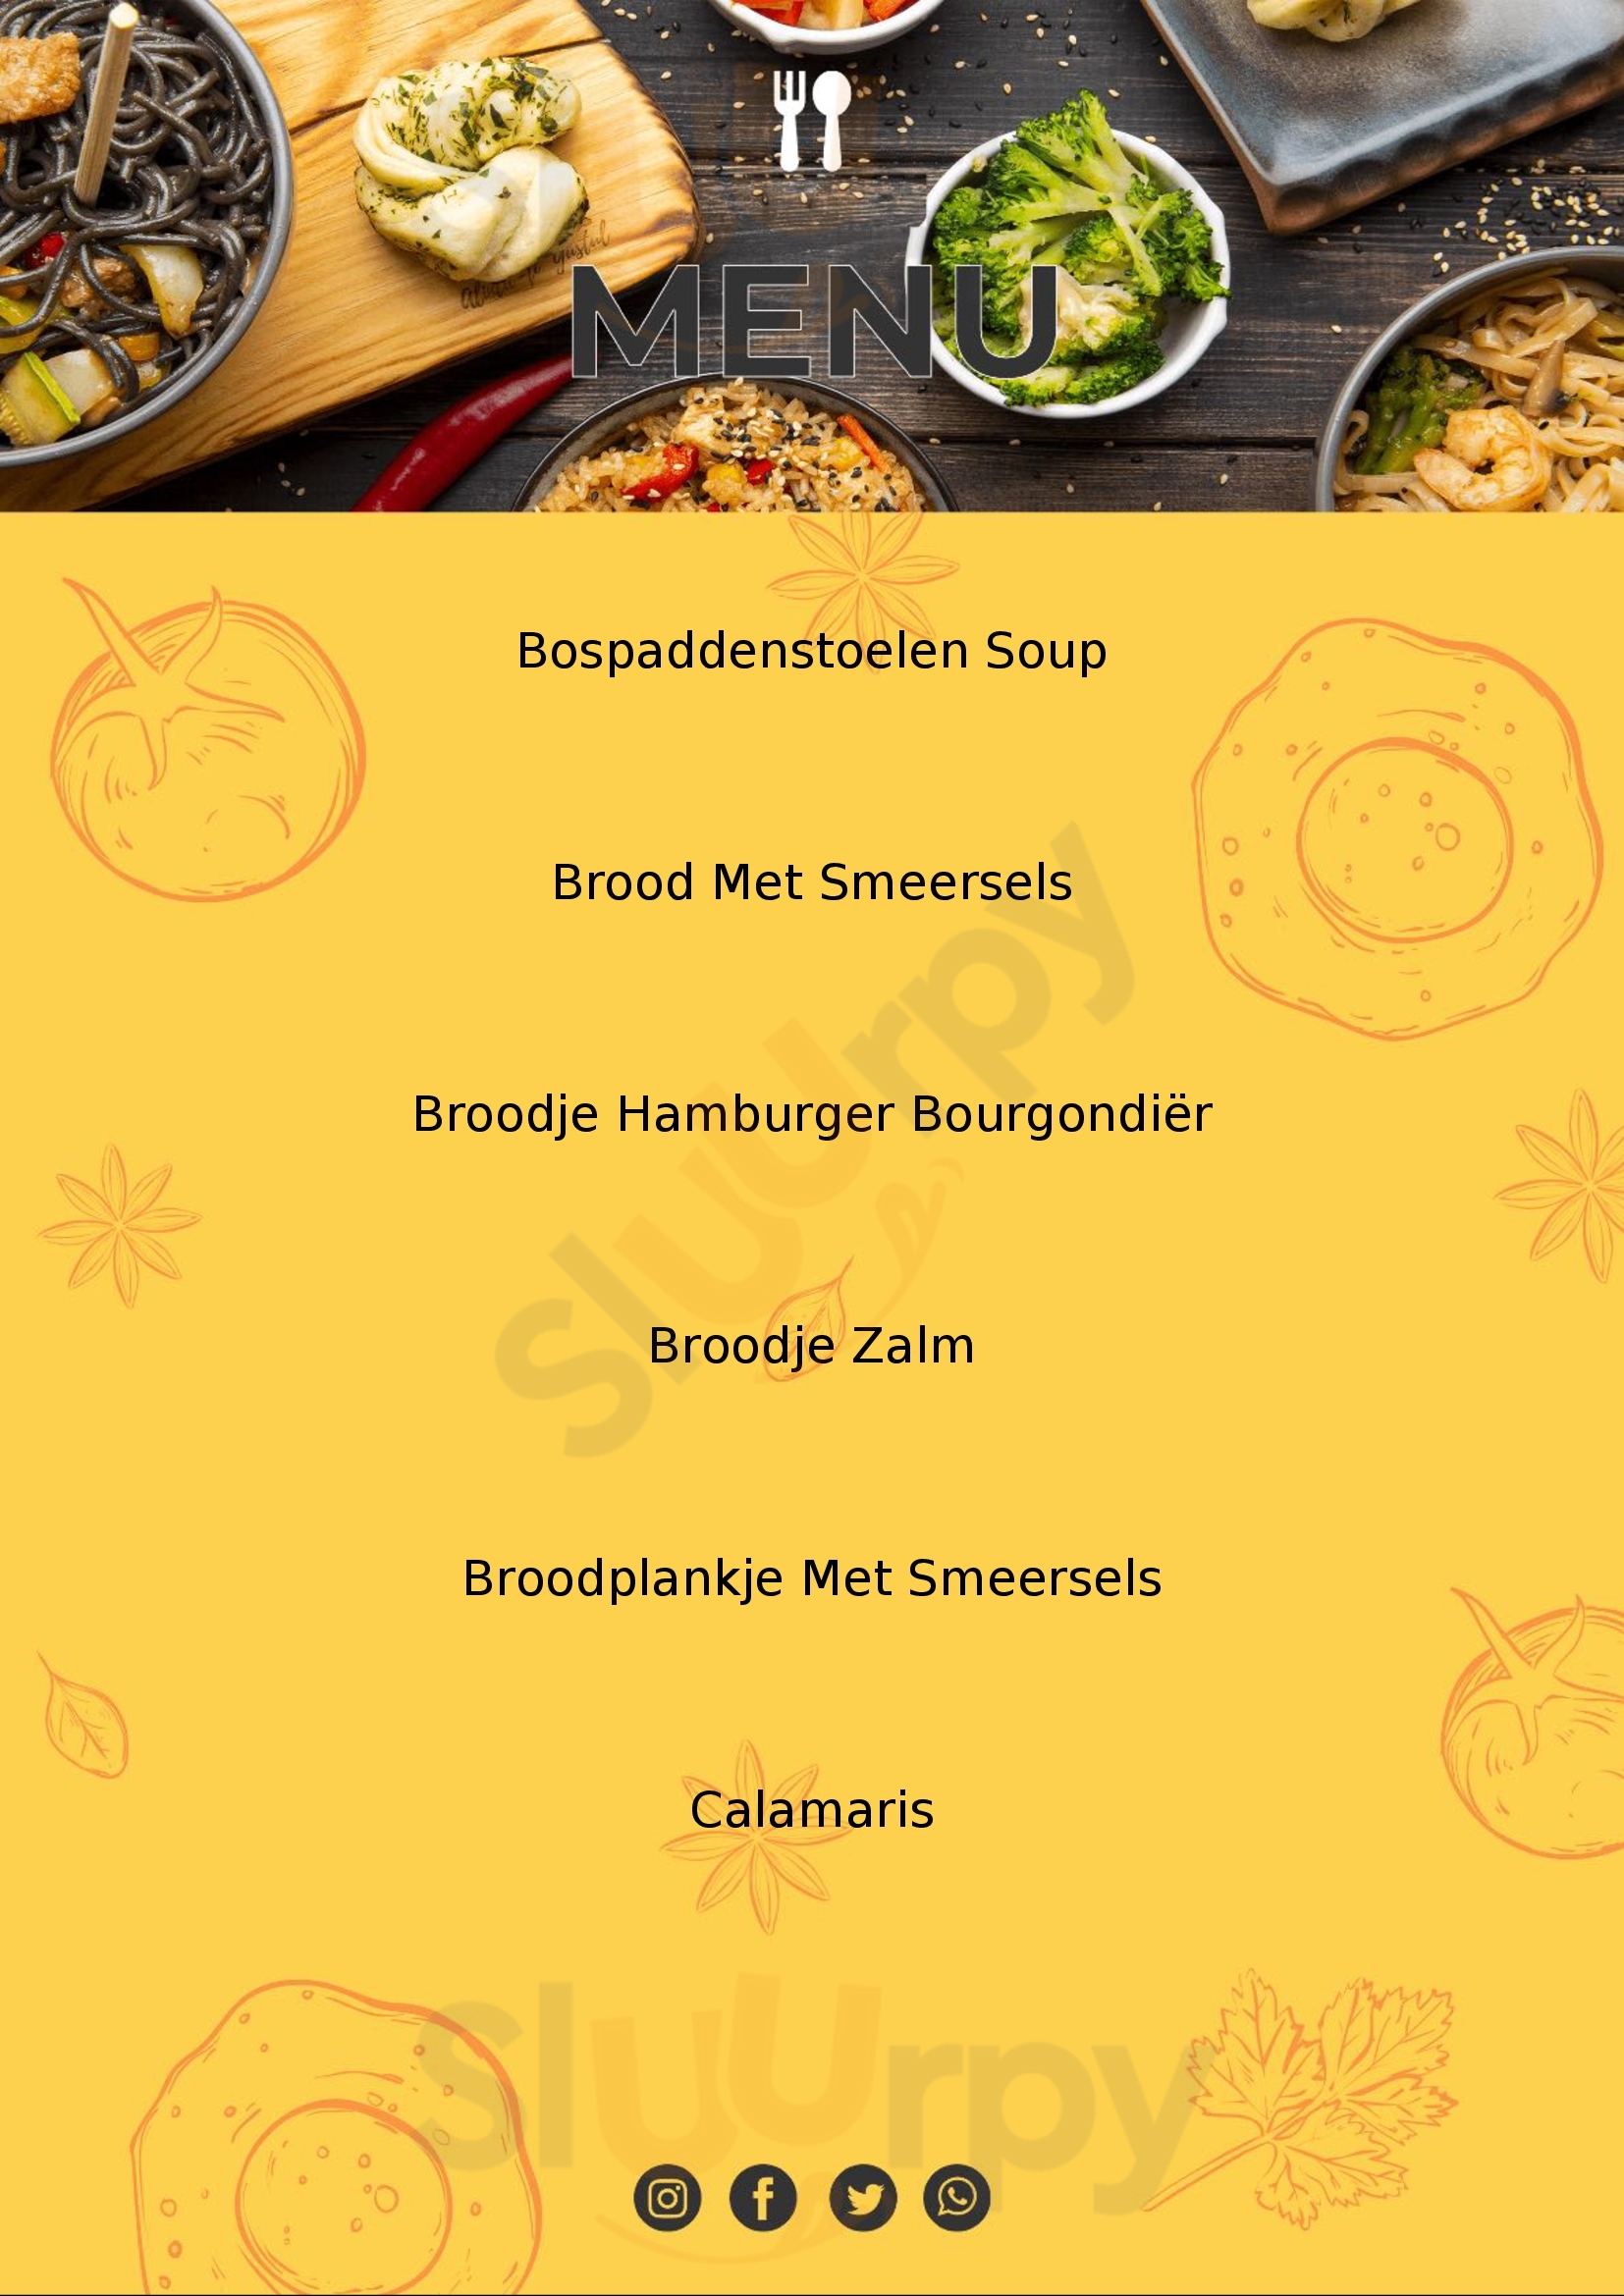 Brasserie De Bourgondier Capelle aan den IJssel Menu - 1